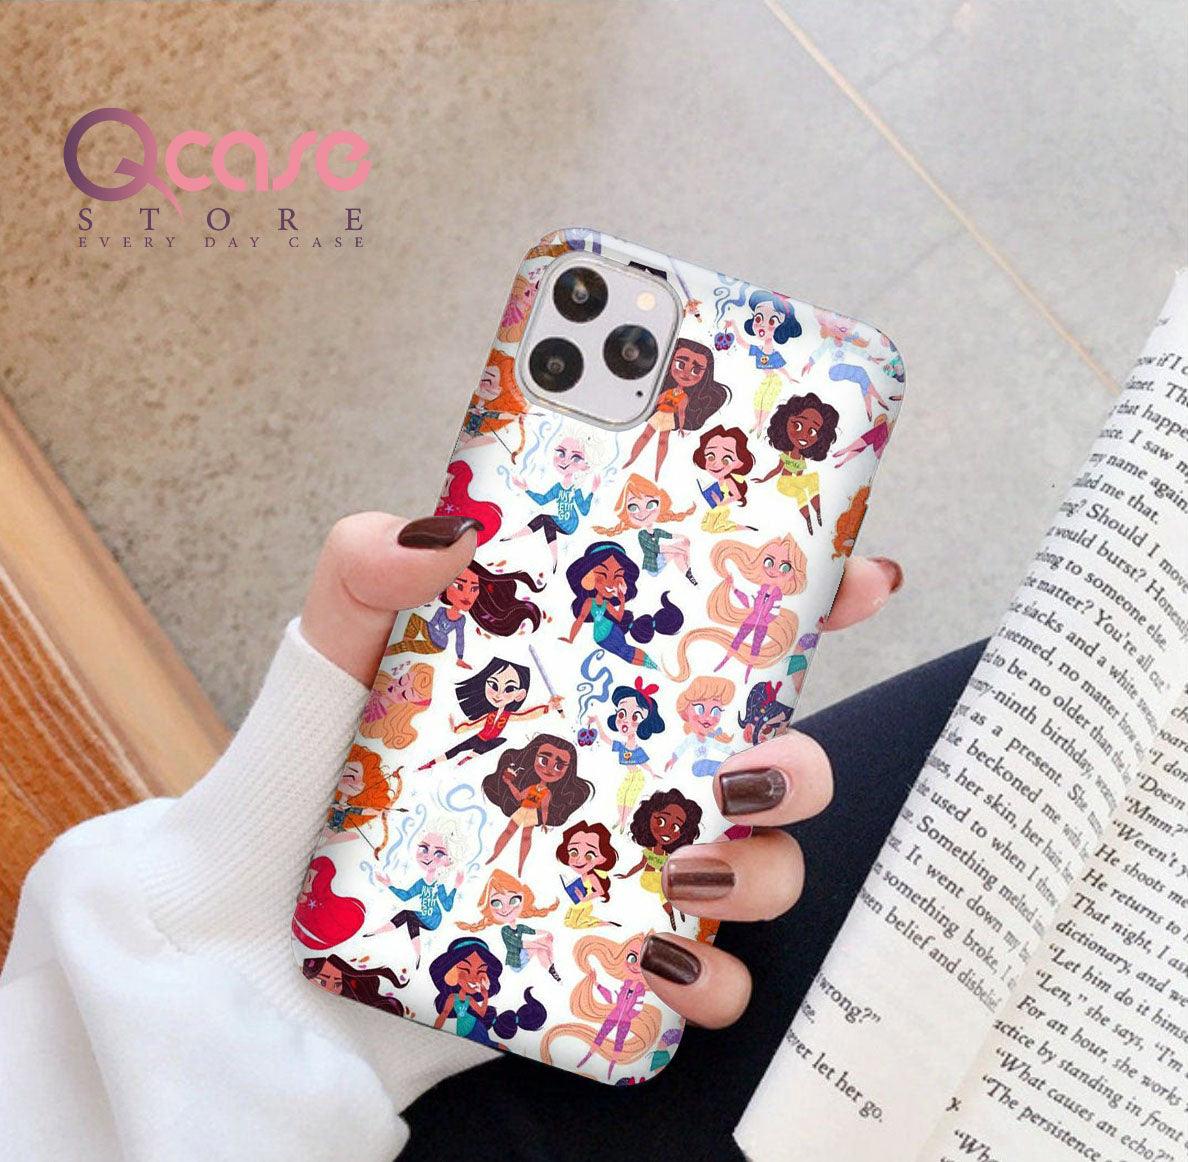 Disney Princess Phone Cover - Qcase Store | Everyday Case